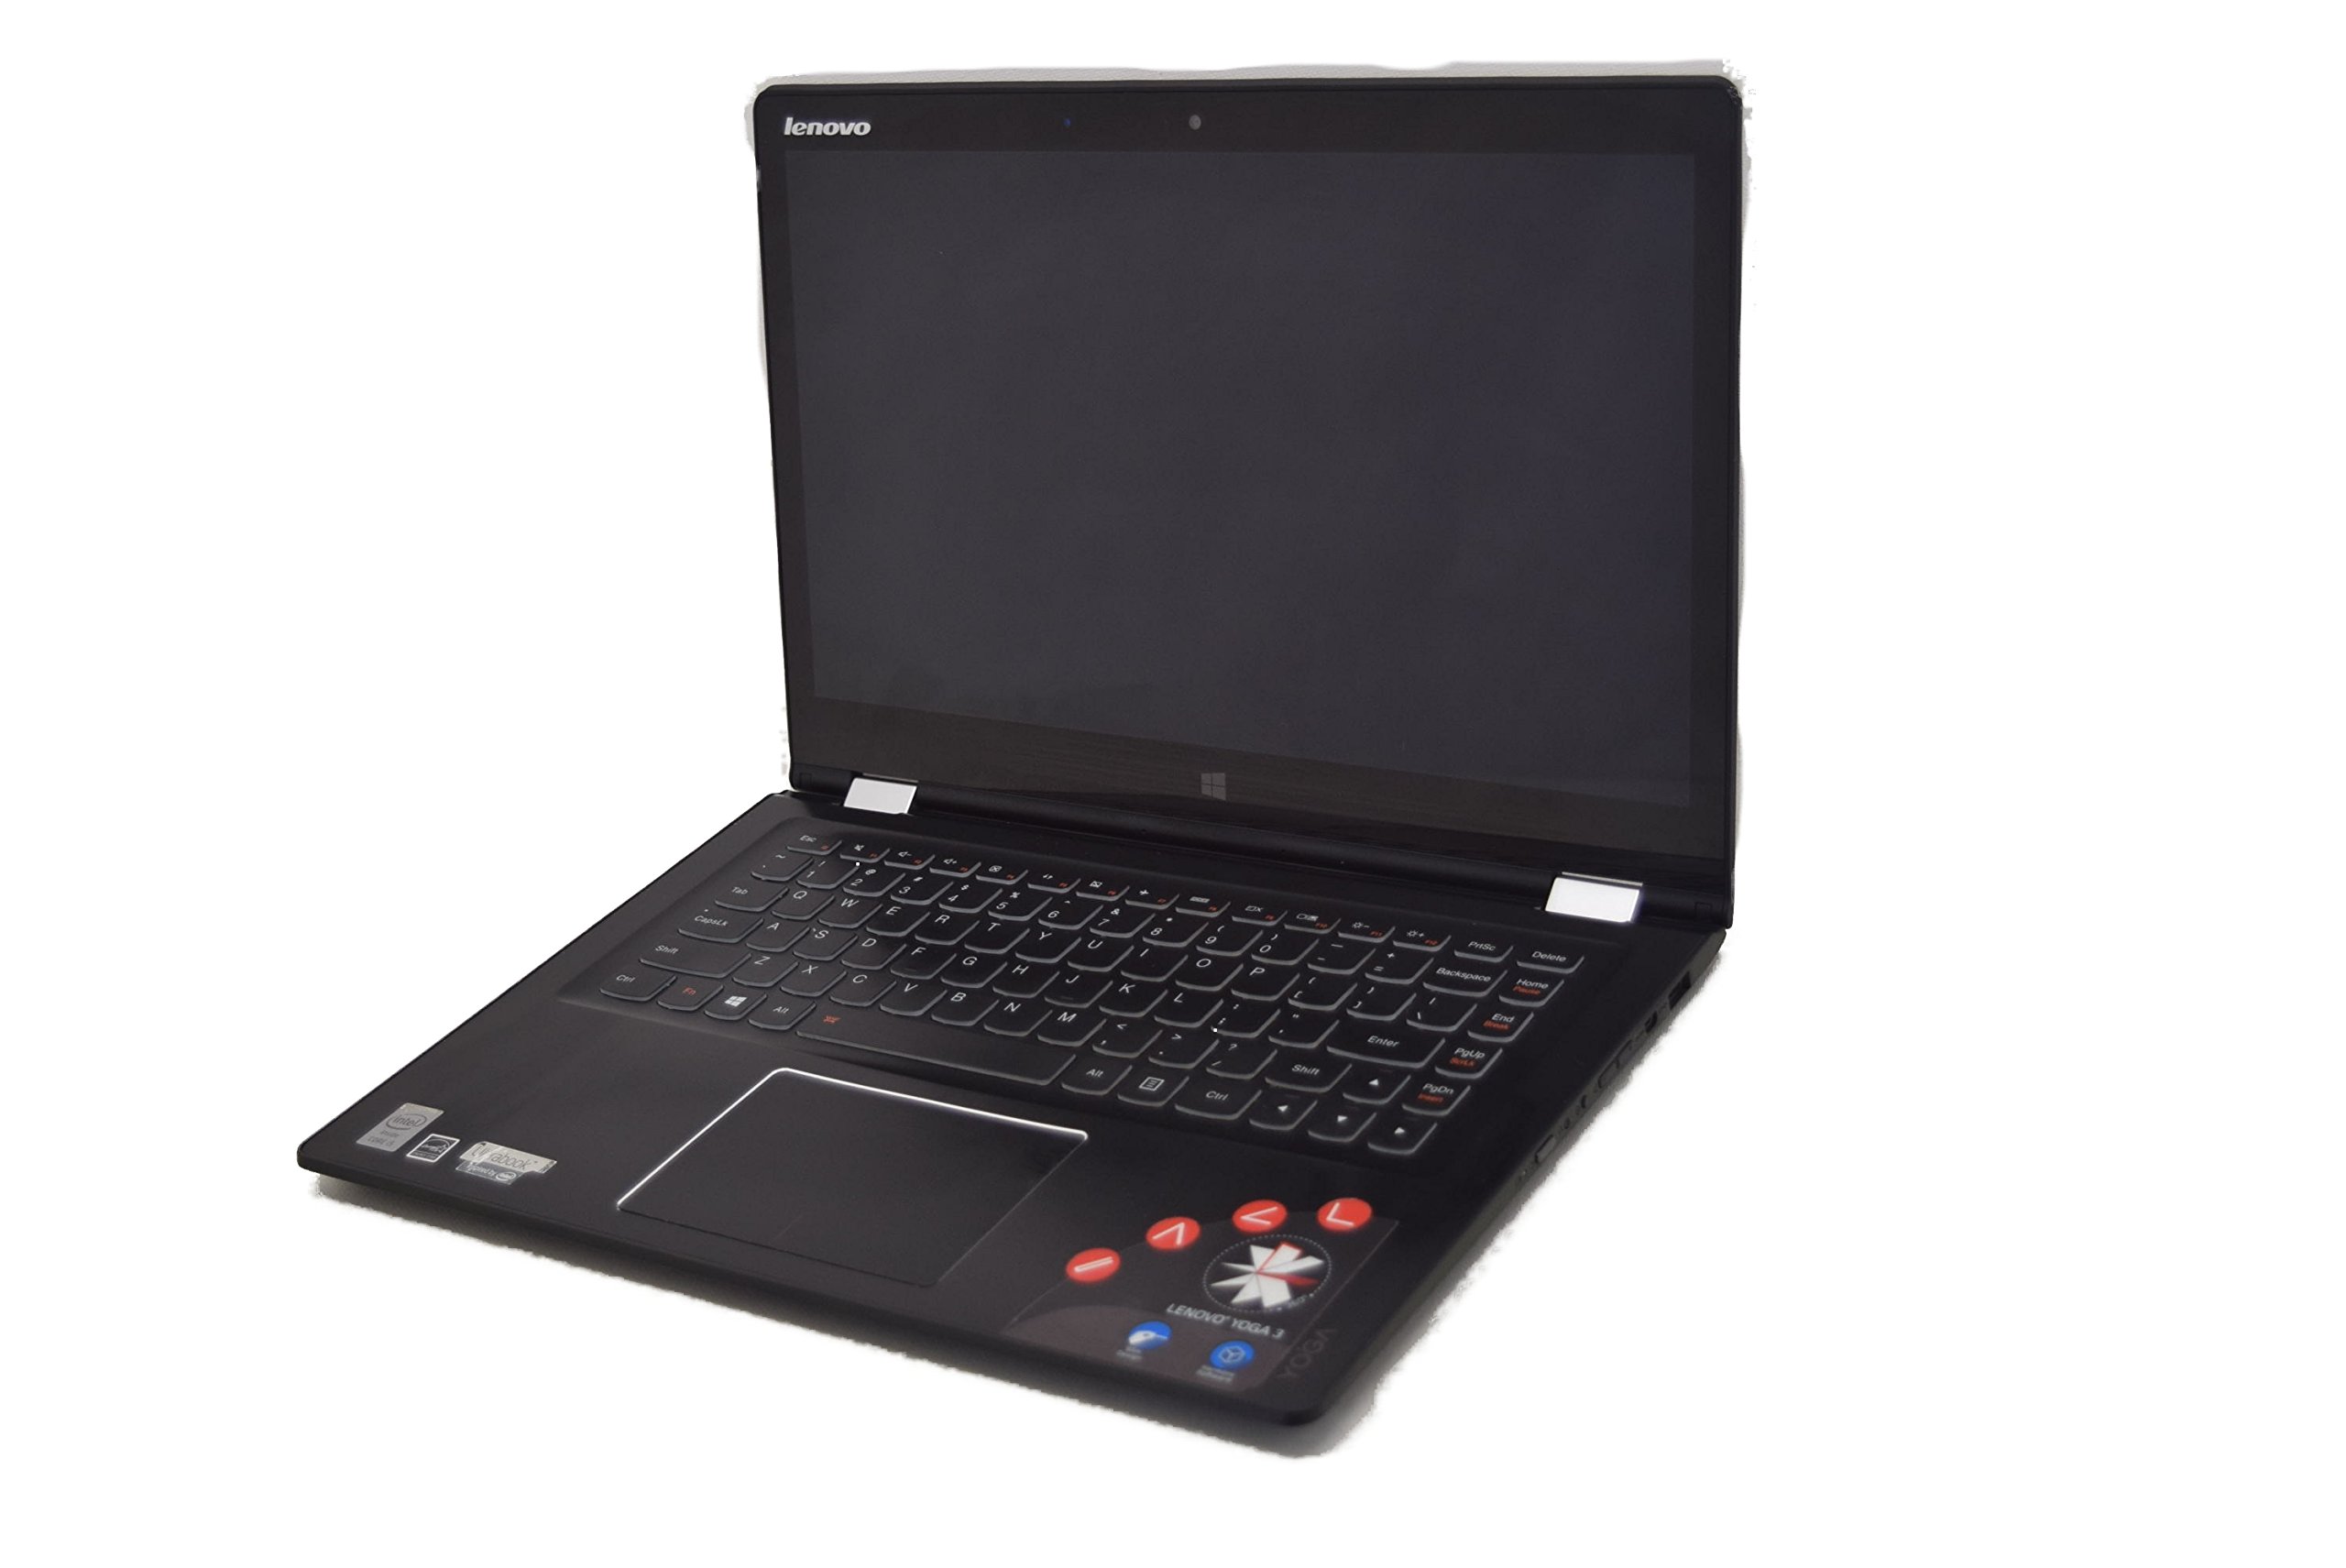 Lenovo laptop with a black screen